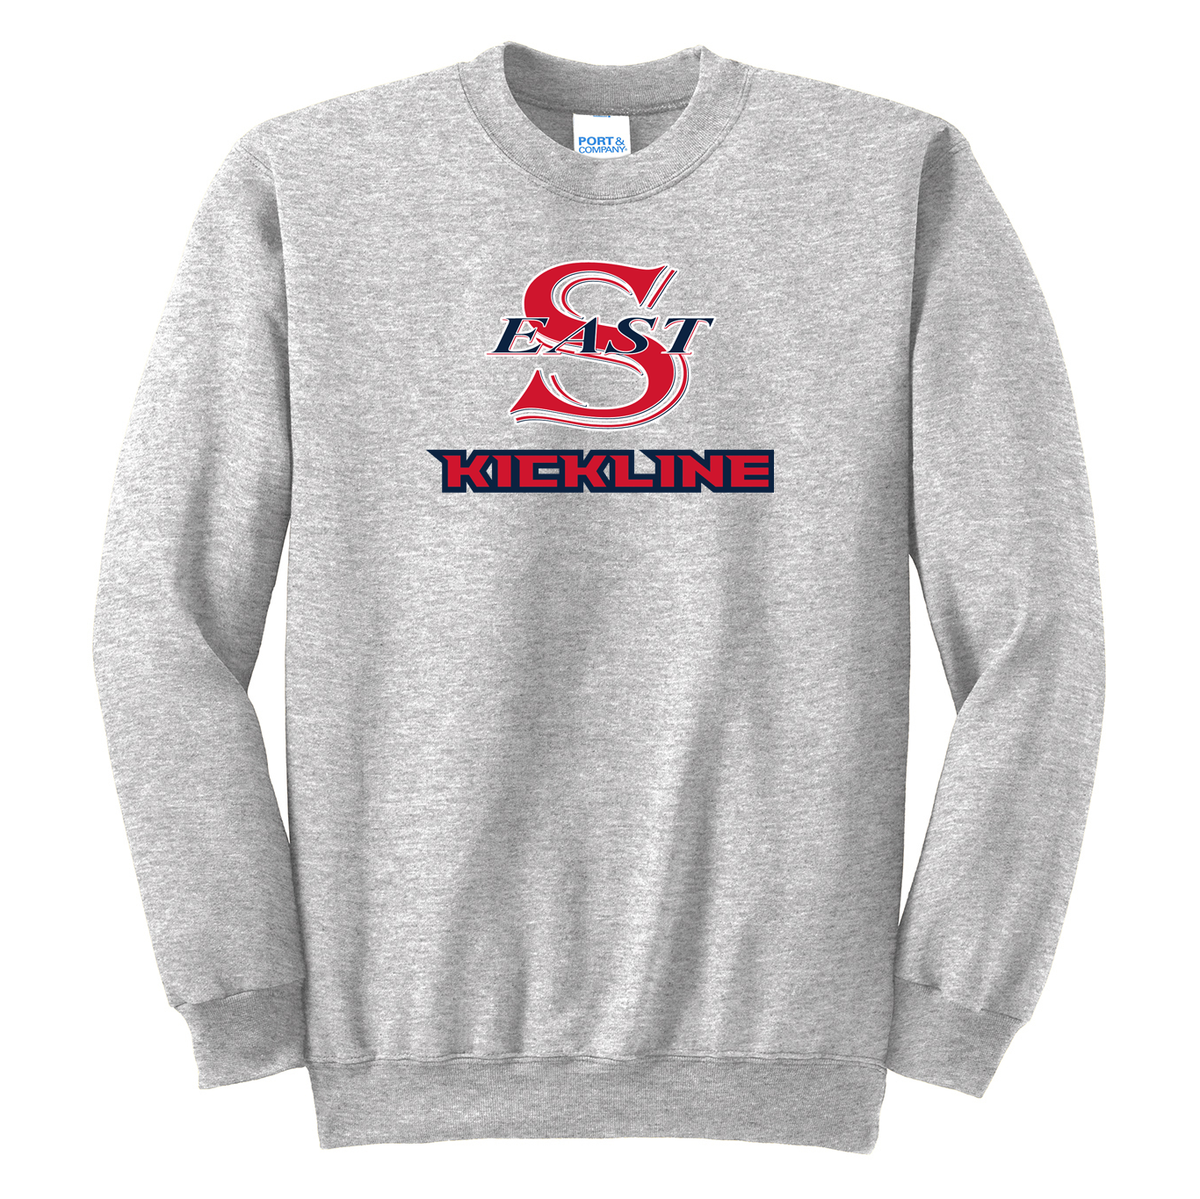 Smithtown East Kickline  Crew Neck Sweater